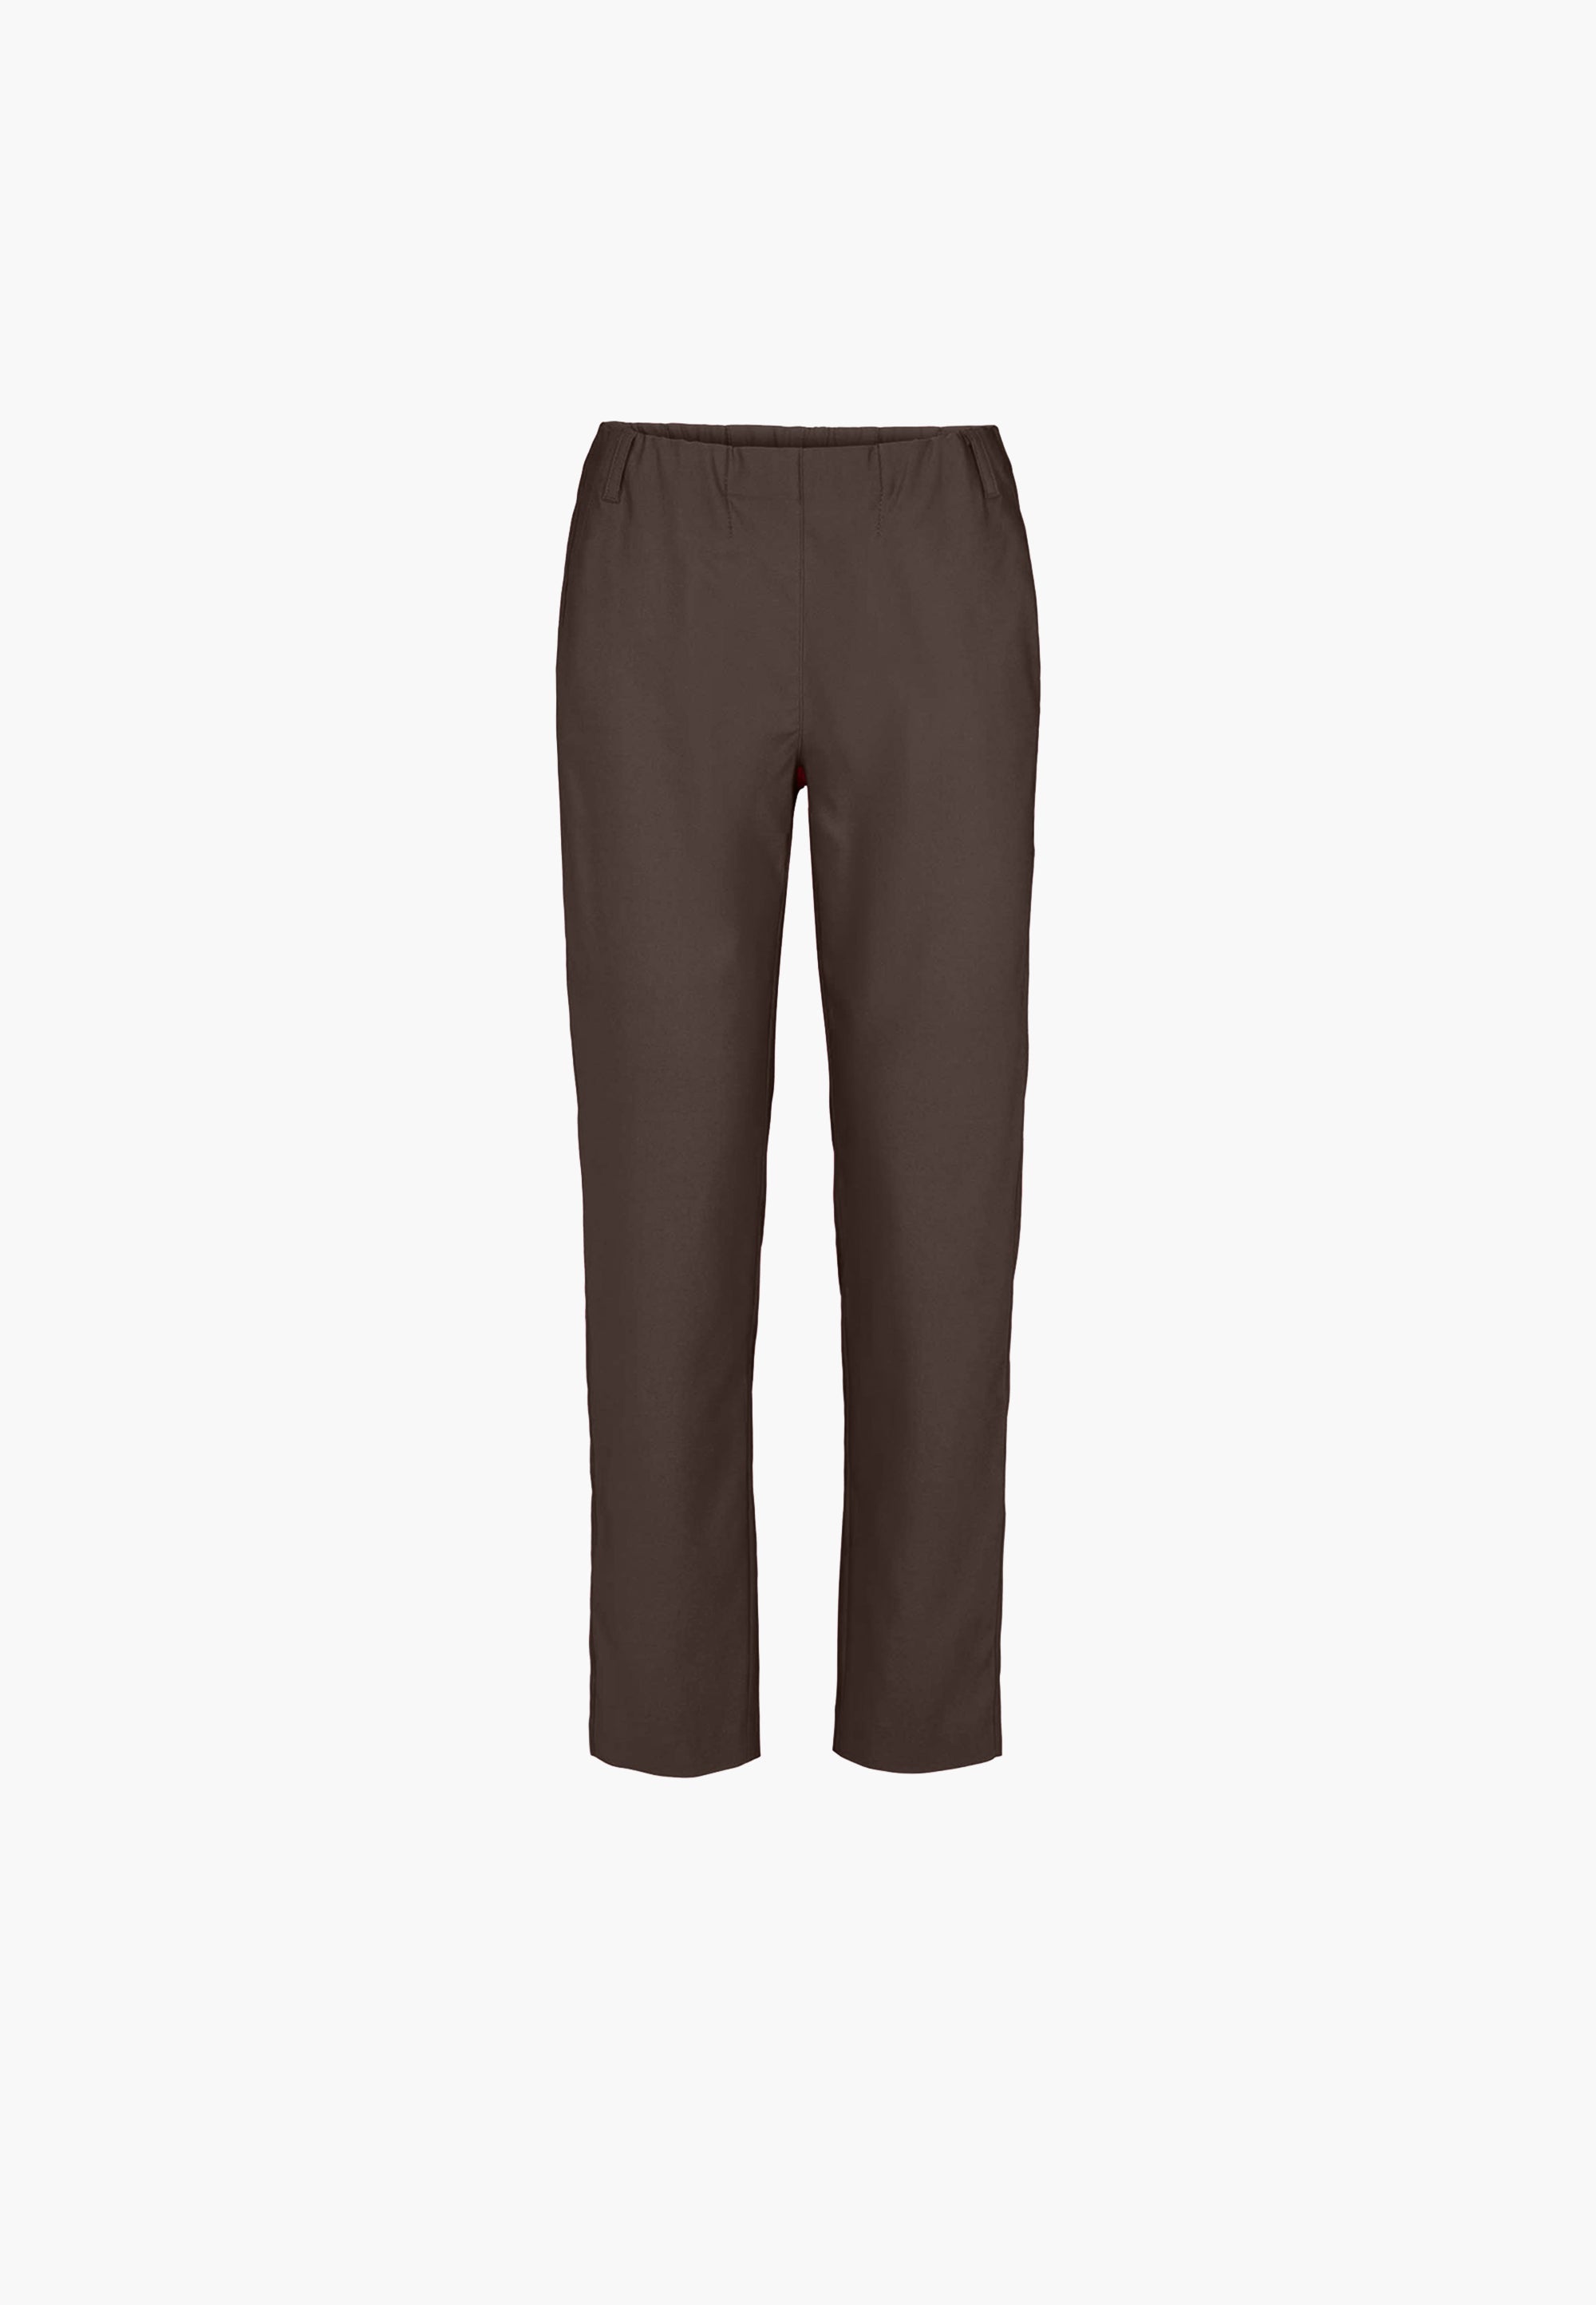 LAURIE  Taylor Regular - Short Length Trousers REGULAR 88000 Brown